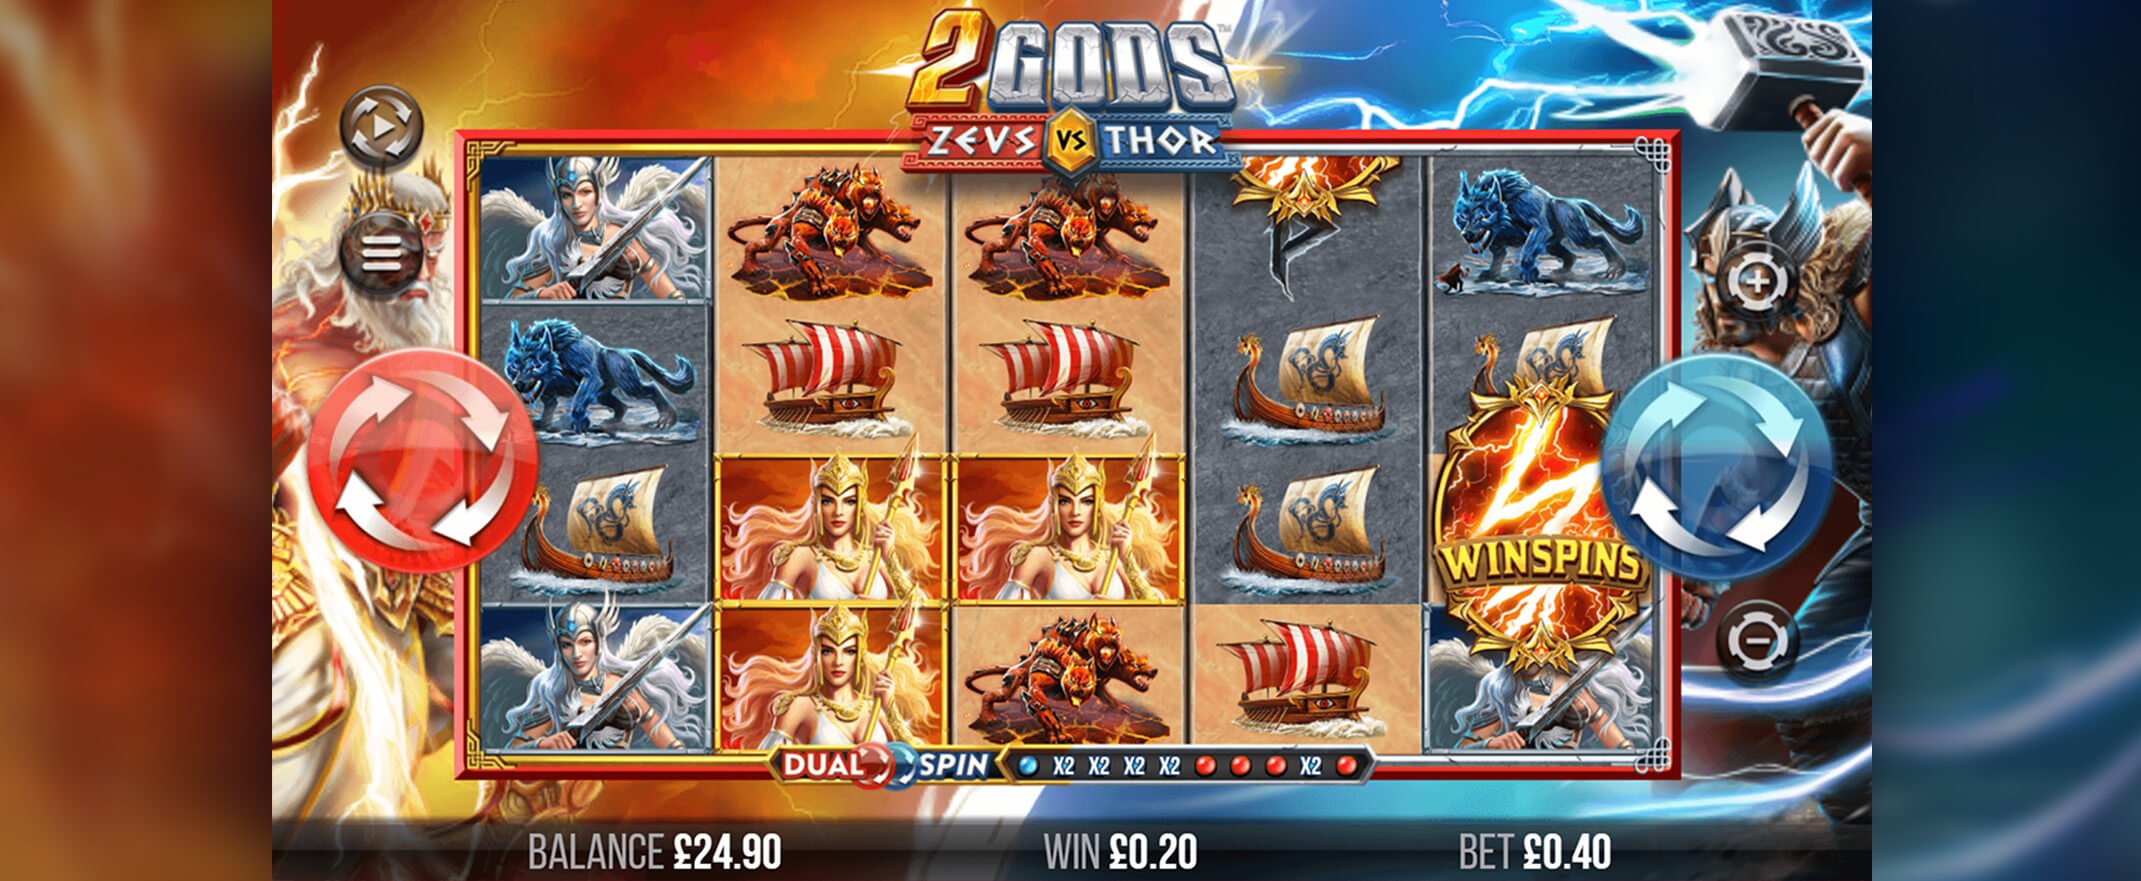 2 Gods Zeus Vs Thor slot screenshot